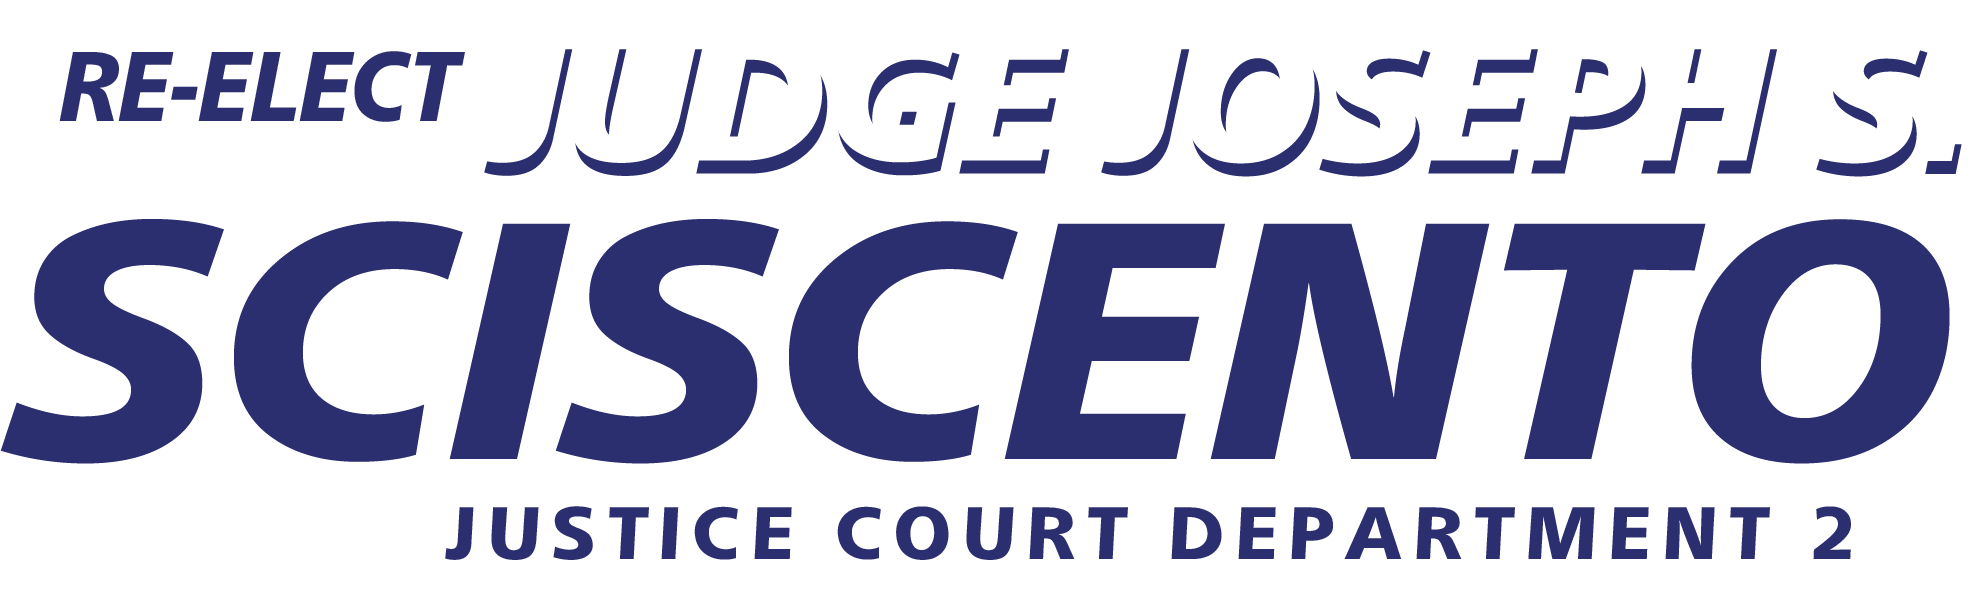 Judge Joseph Sciscento